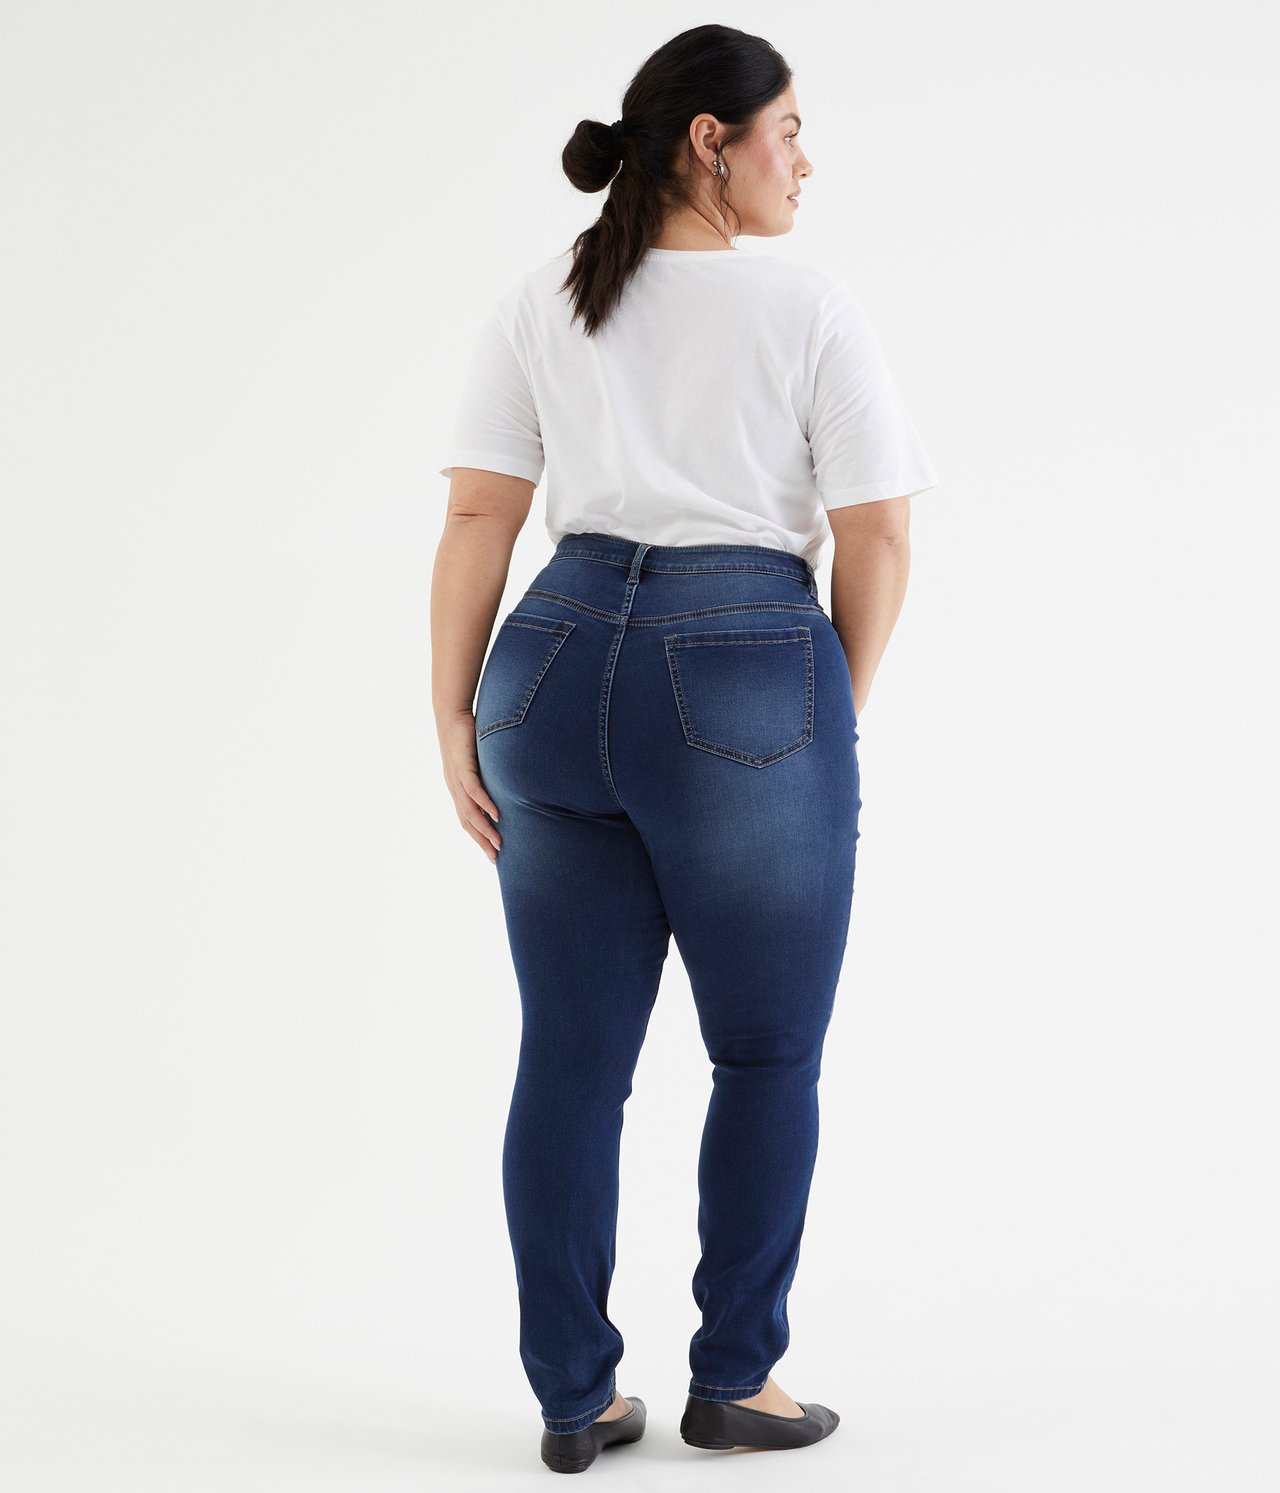 Ebba slim jeans extra long leg - Mørk denim - 177cm / Storlek: 50L - 4